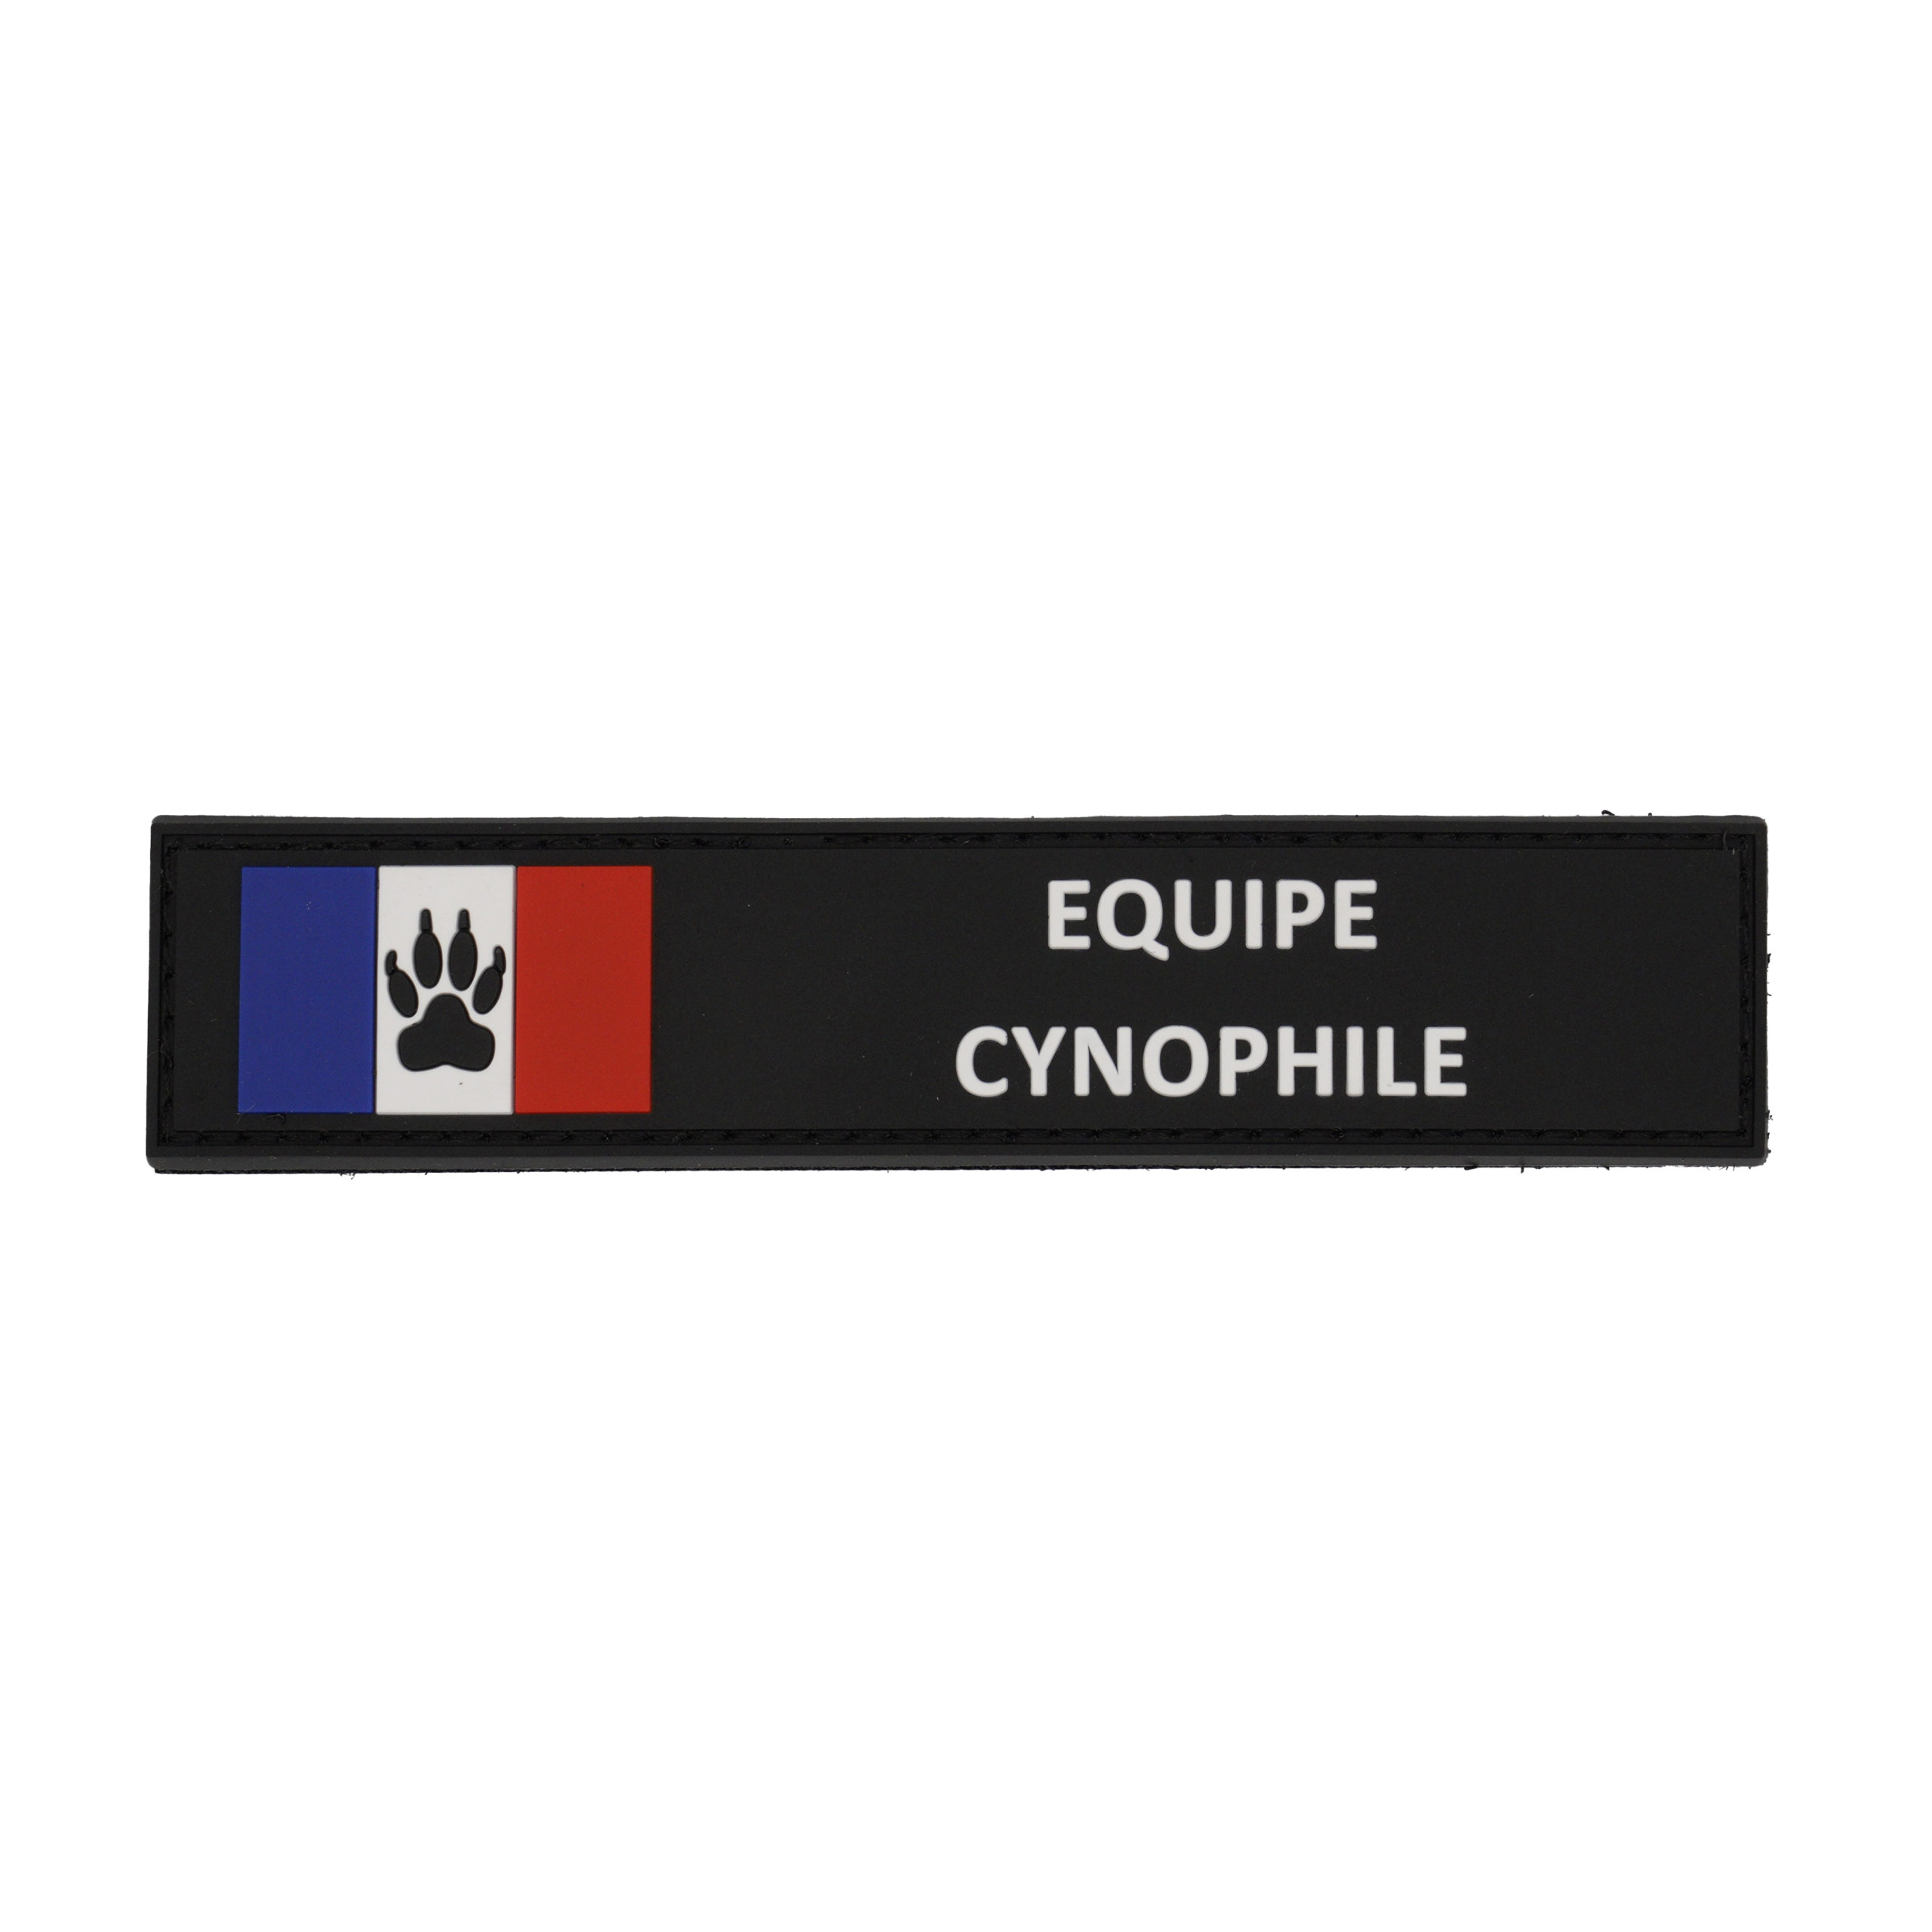 BANDE PATRO EQUIPE CYNOPHILE PVC – France Ecussons Design